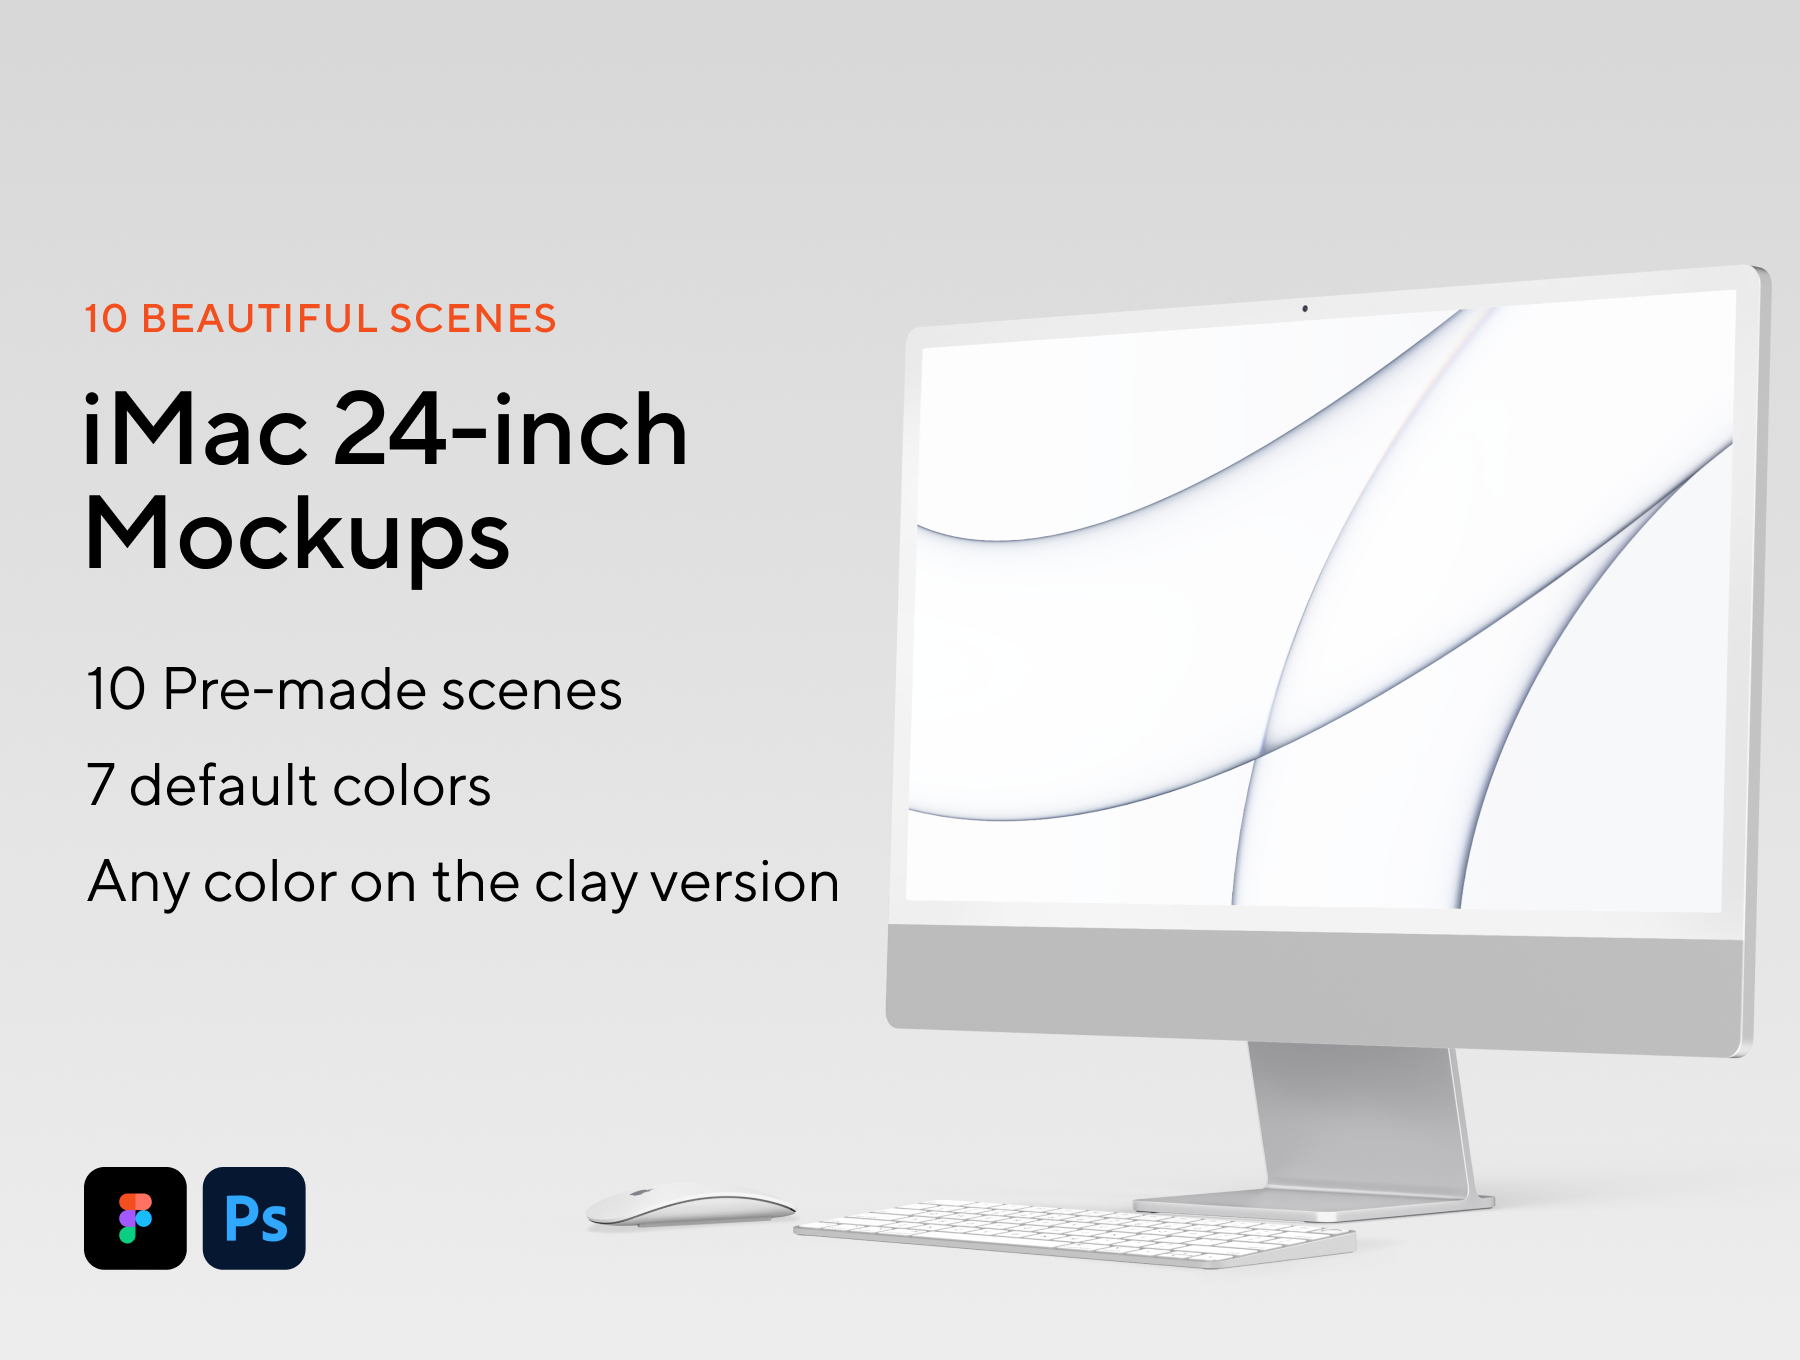 6183 高清展示 iMac 24英寸电脑模型样机-iMac 24-inch Mockups